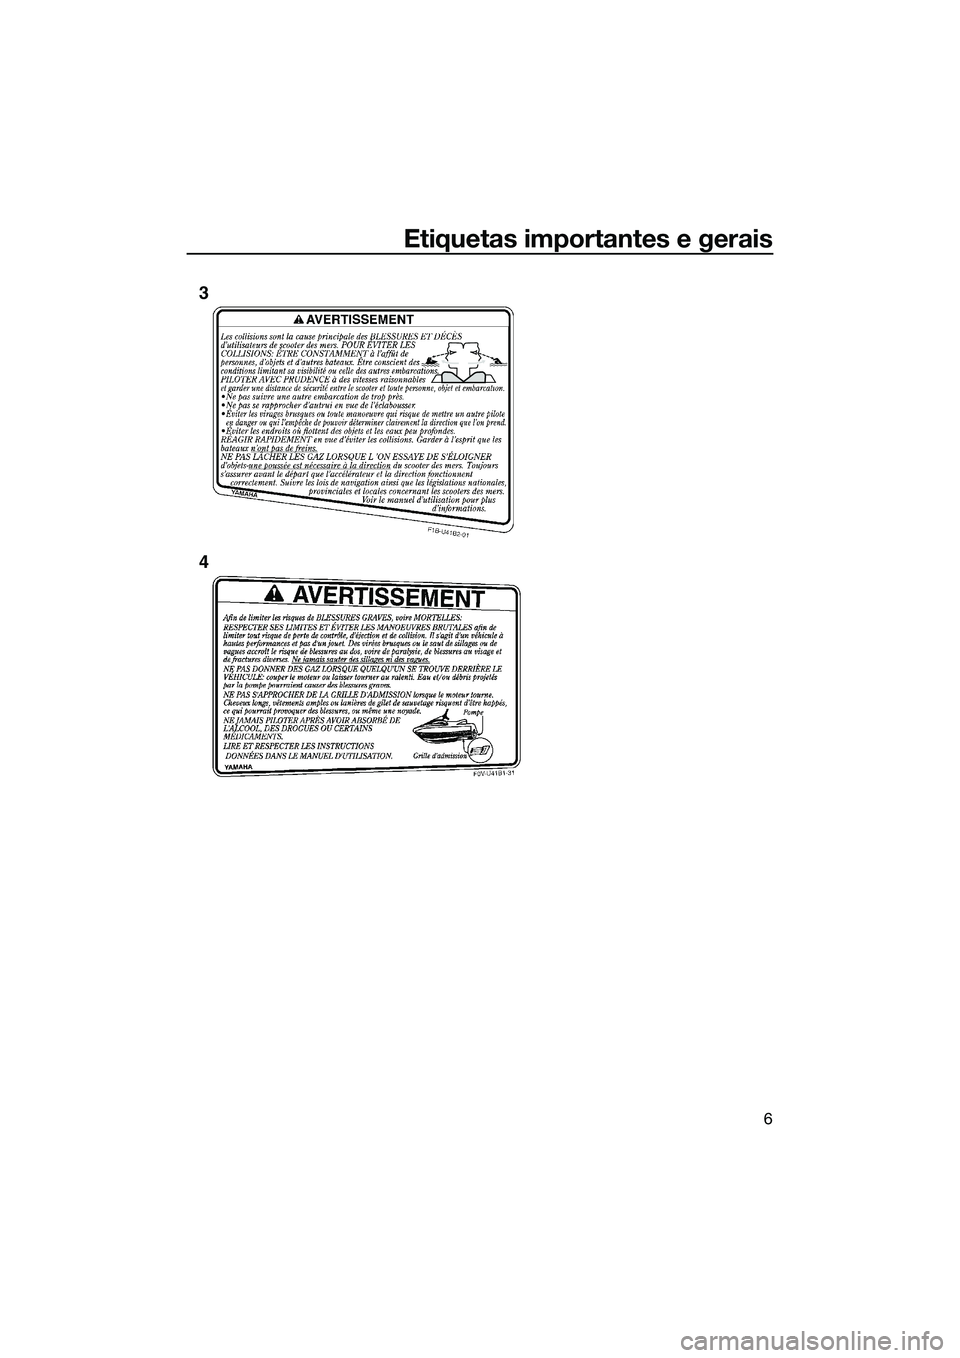 YAMAHA V1 2015  Manual de utilização (in Portuguese) Etiquetas importantes e gerais
6
3
4
UF2P72P0.book  Page 6  Monday, August 25, 2014  2:33 PM 